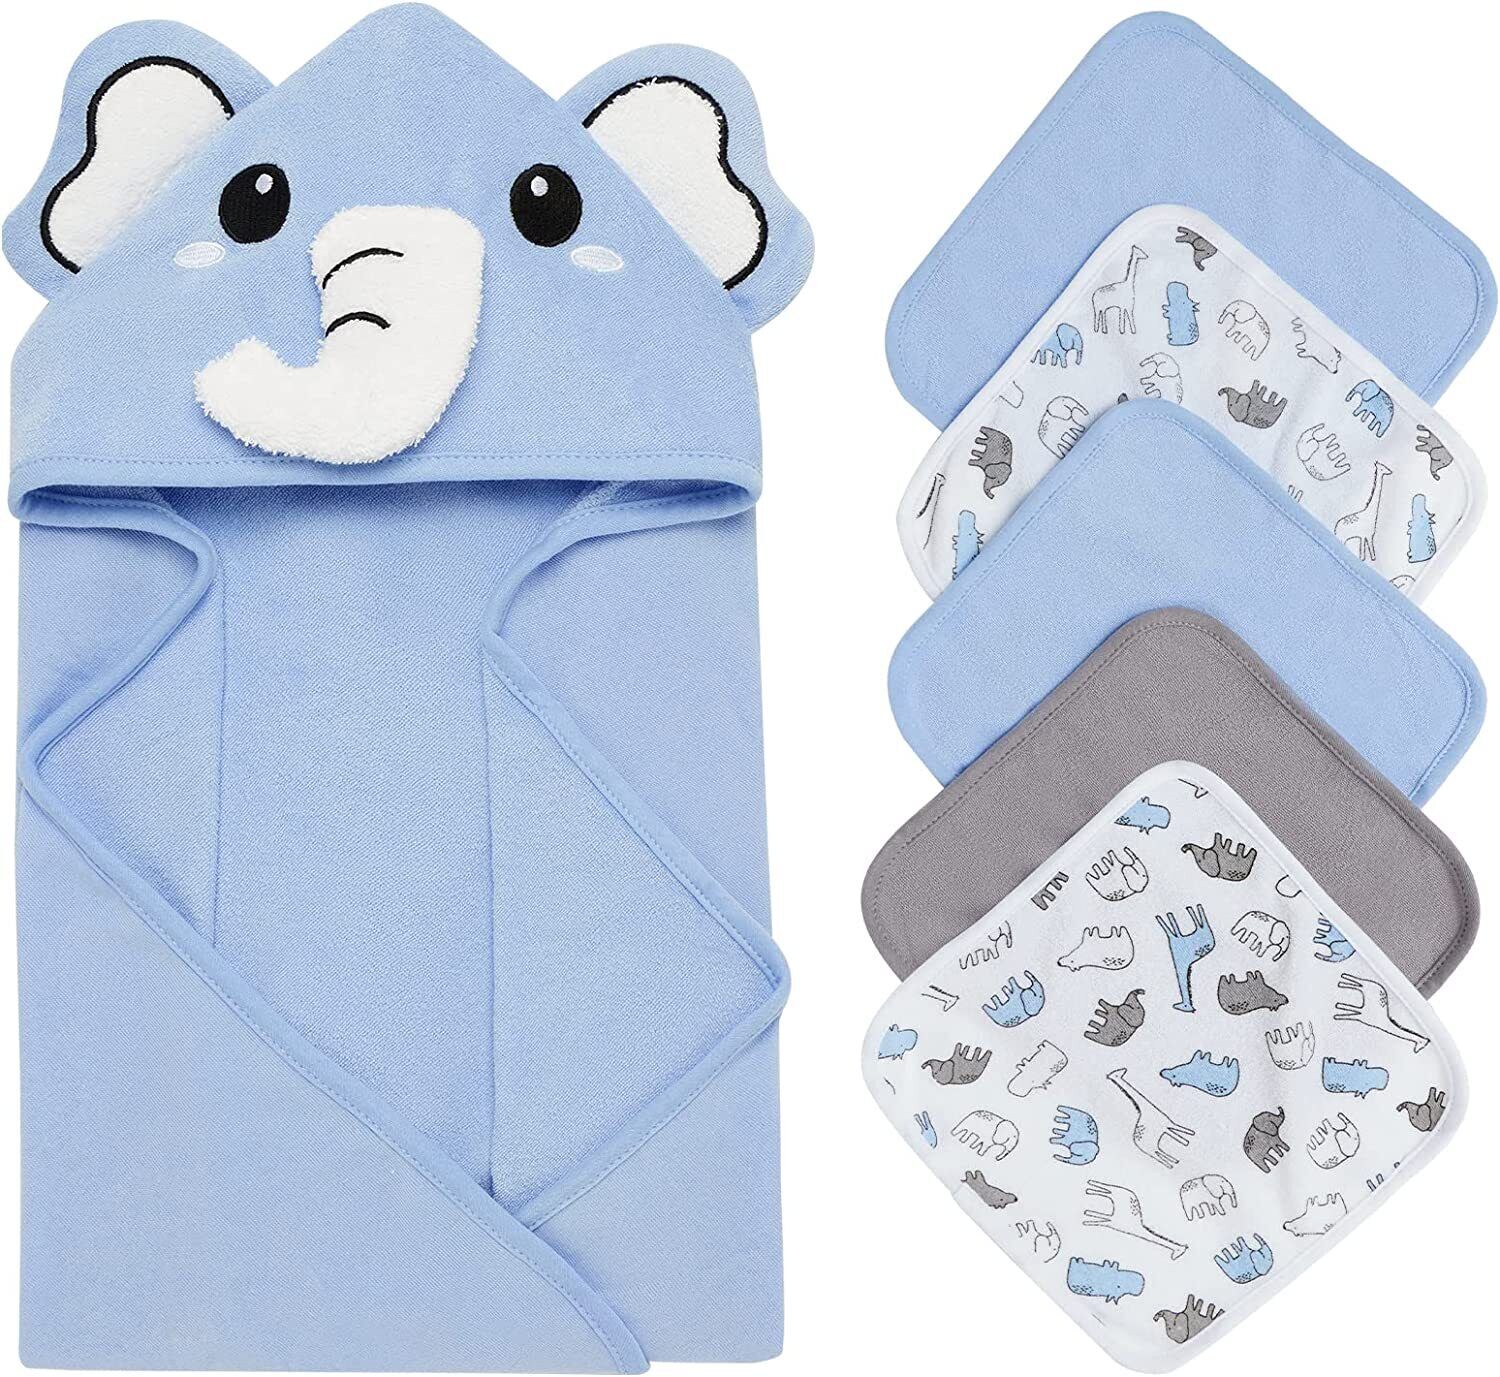 Cartoon Soft Baby Washcloths - 6 Pack